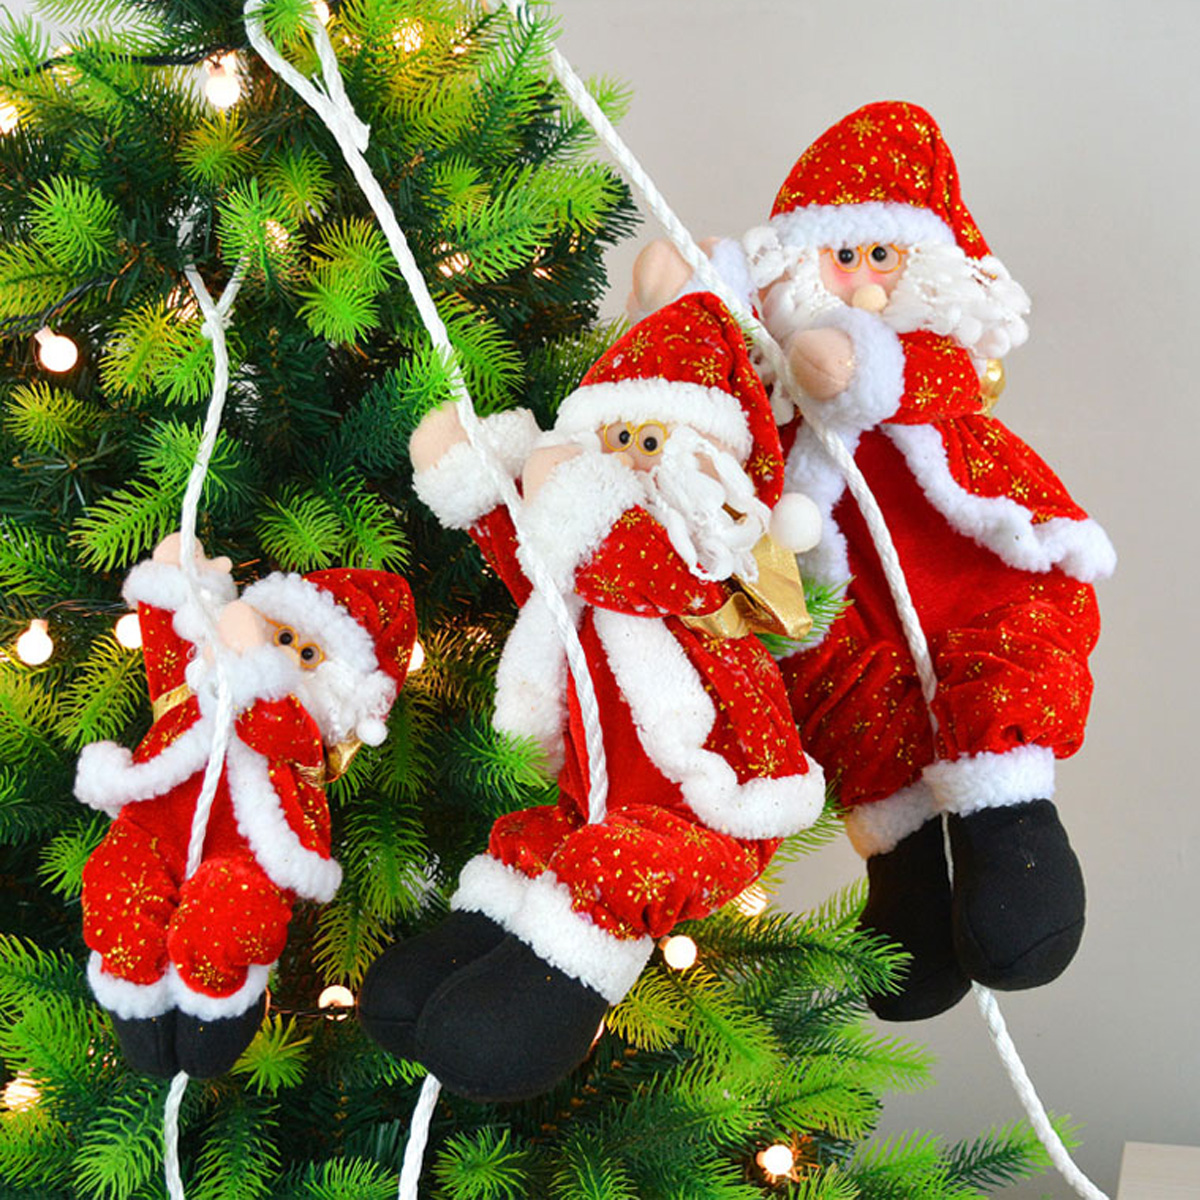 Santa-Climbing-On-Rope-Indoor-Outdoor-Christmas-Tree-Garden-Decorations-1590884-3